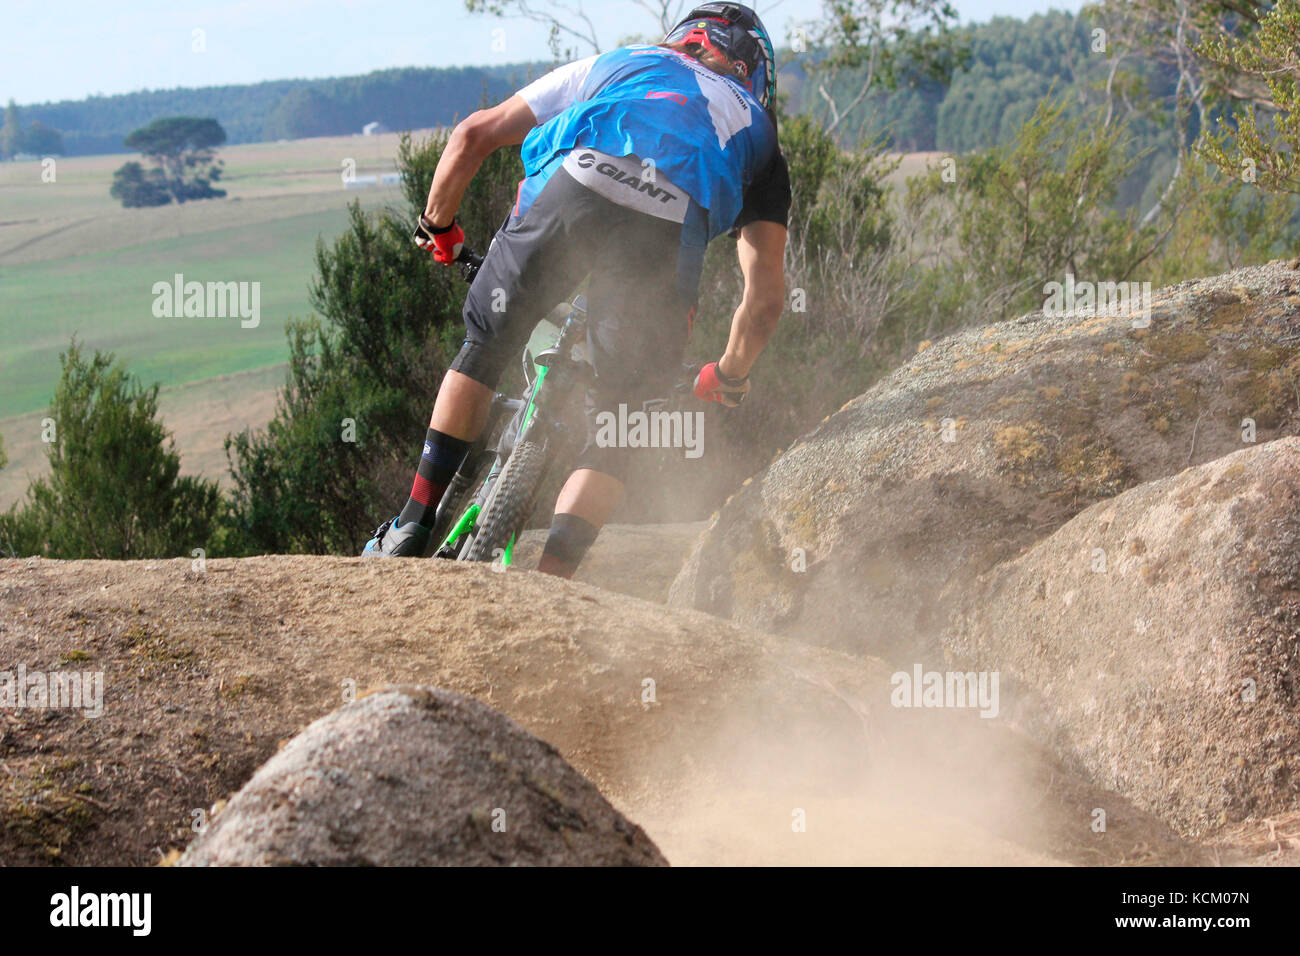 Competitor in Round 2 of the Enduro World Series mountain bike race on a Blue Derby track. Tasmania, Australia Stock Photo